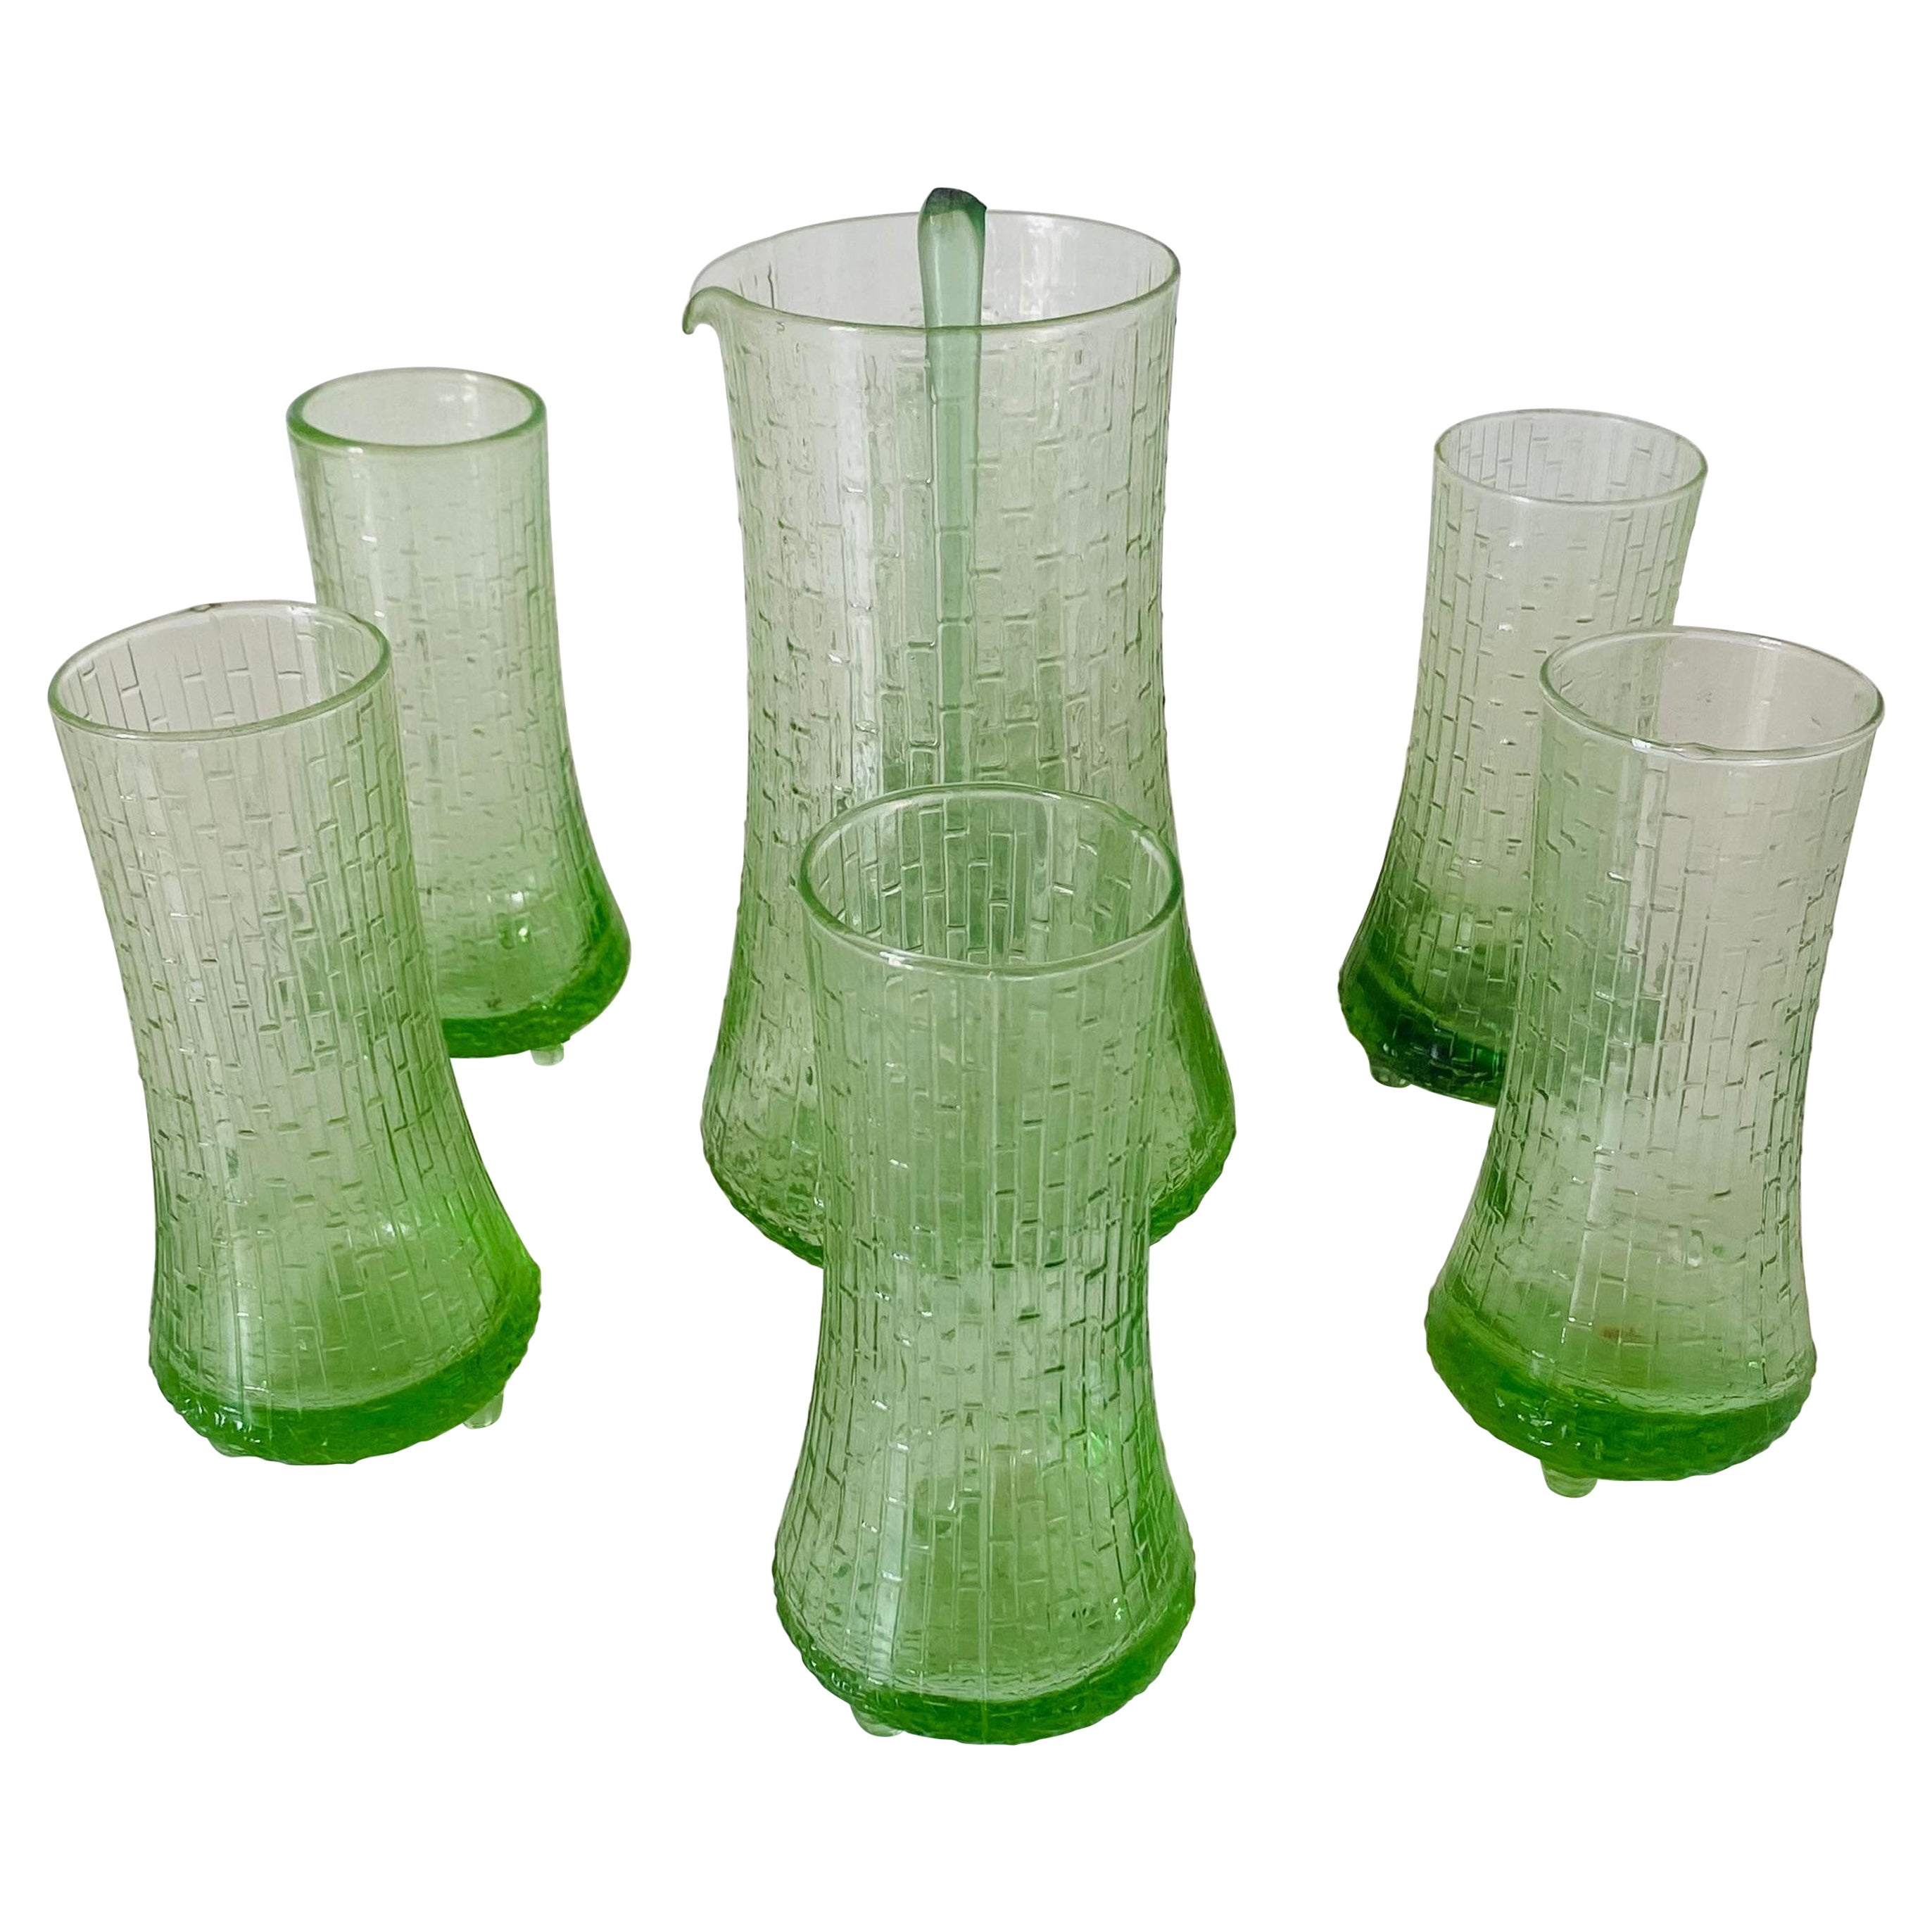 Grünes Vintage-Cocktail-Set aus Glas, Italien 1960er Jahre